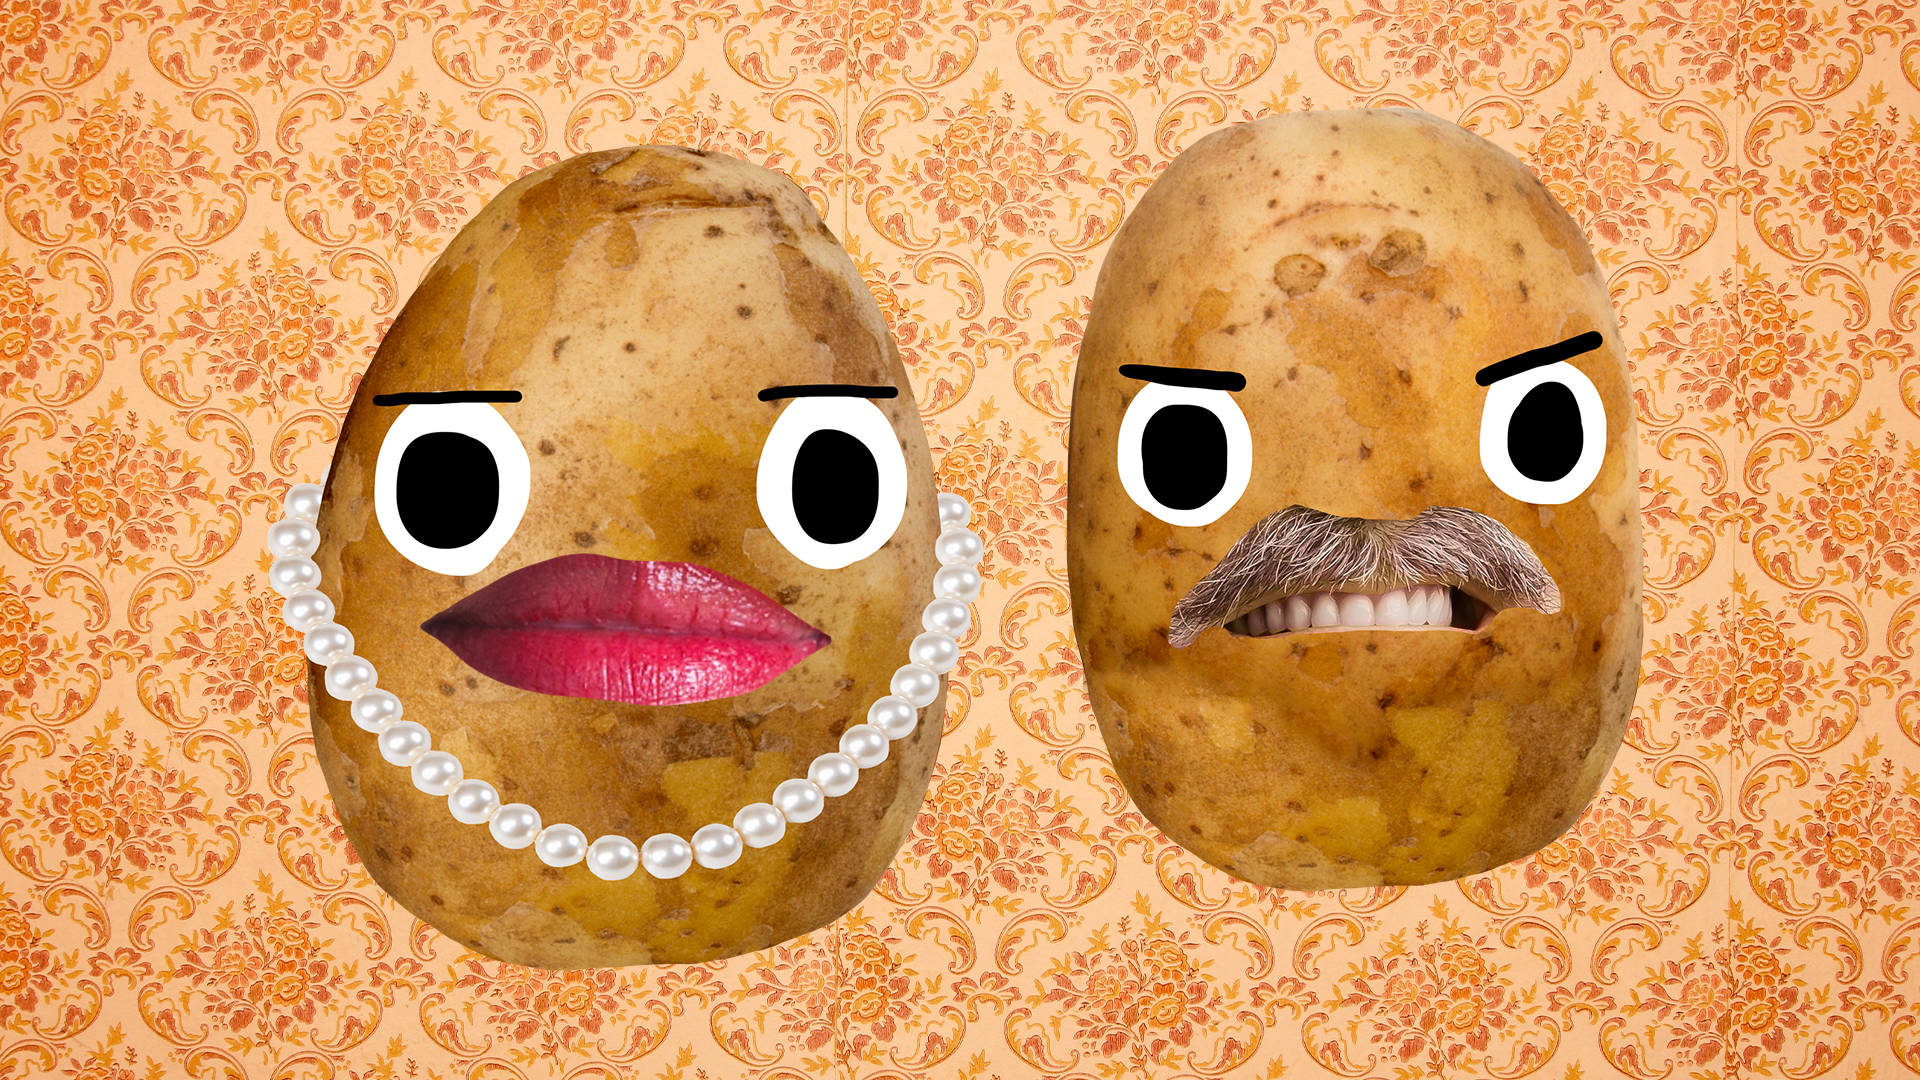 Potato Dursleys looking grumpy